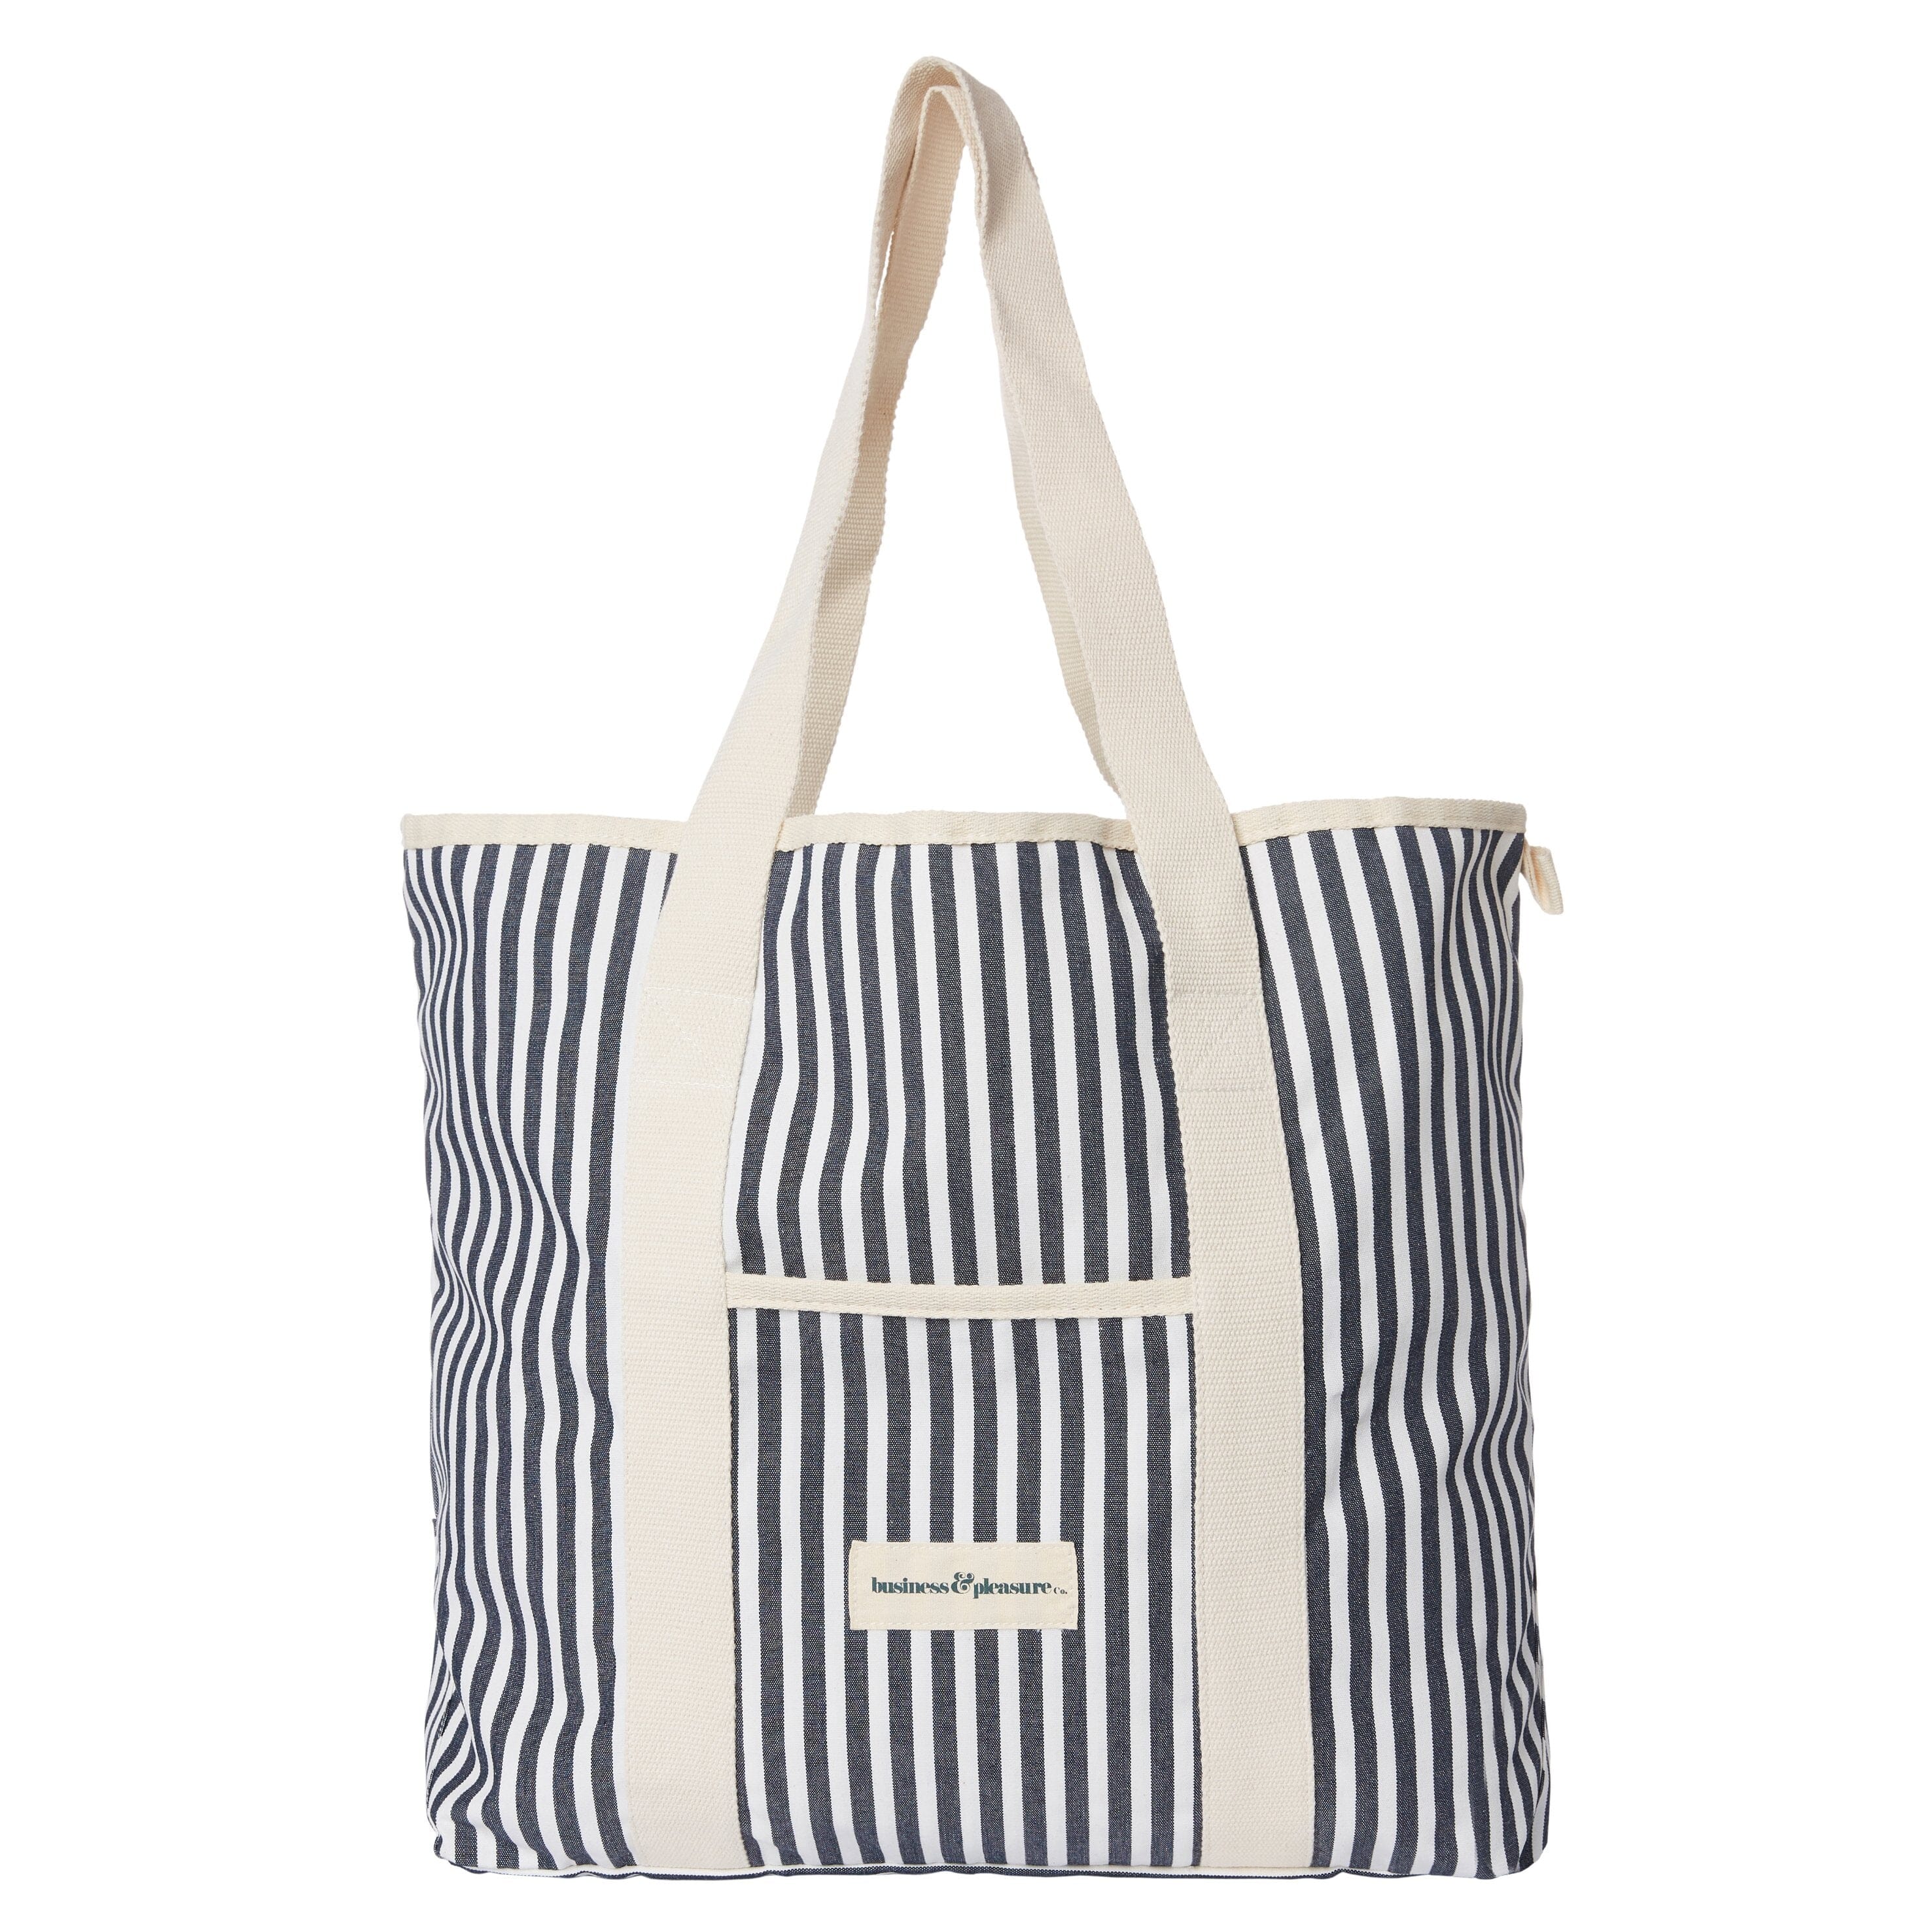 The Beach Bag - Lauren's Navy Stripe - Business & Pleasure Co